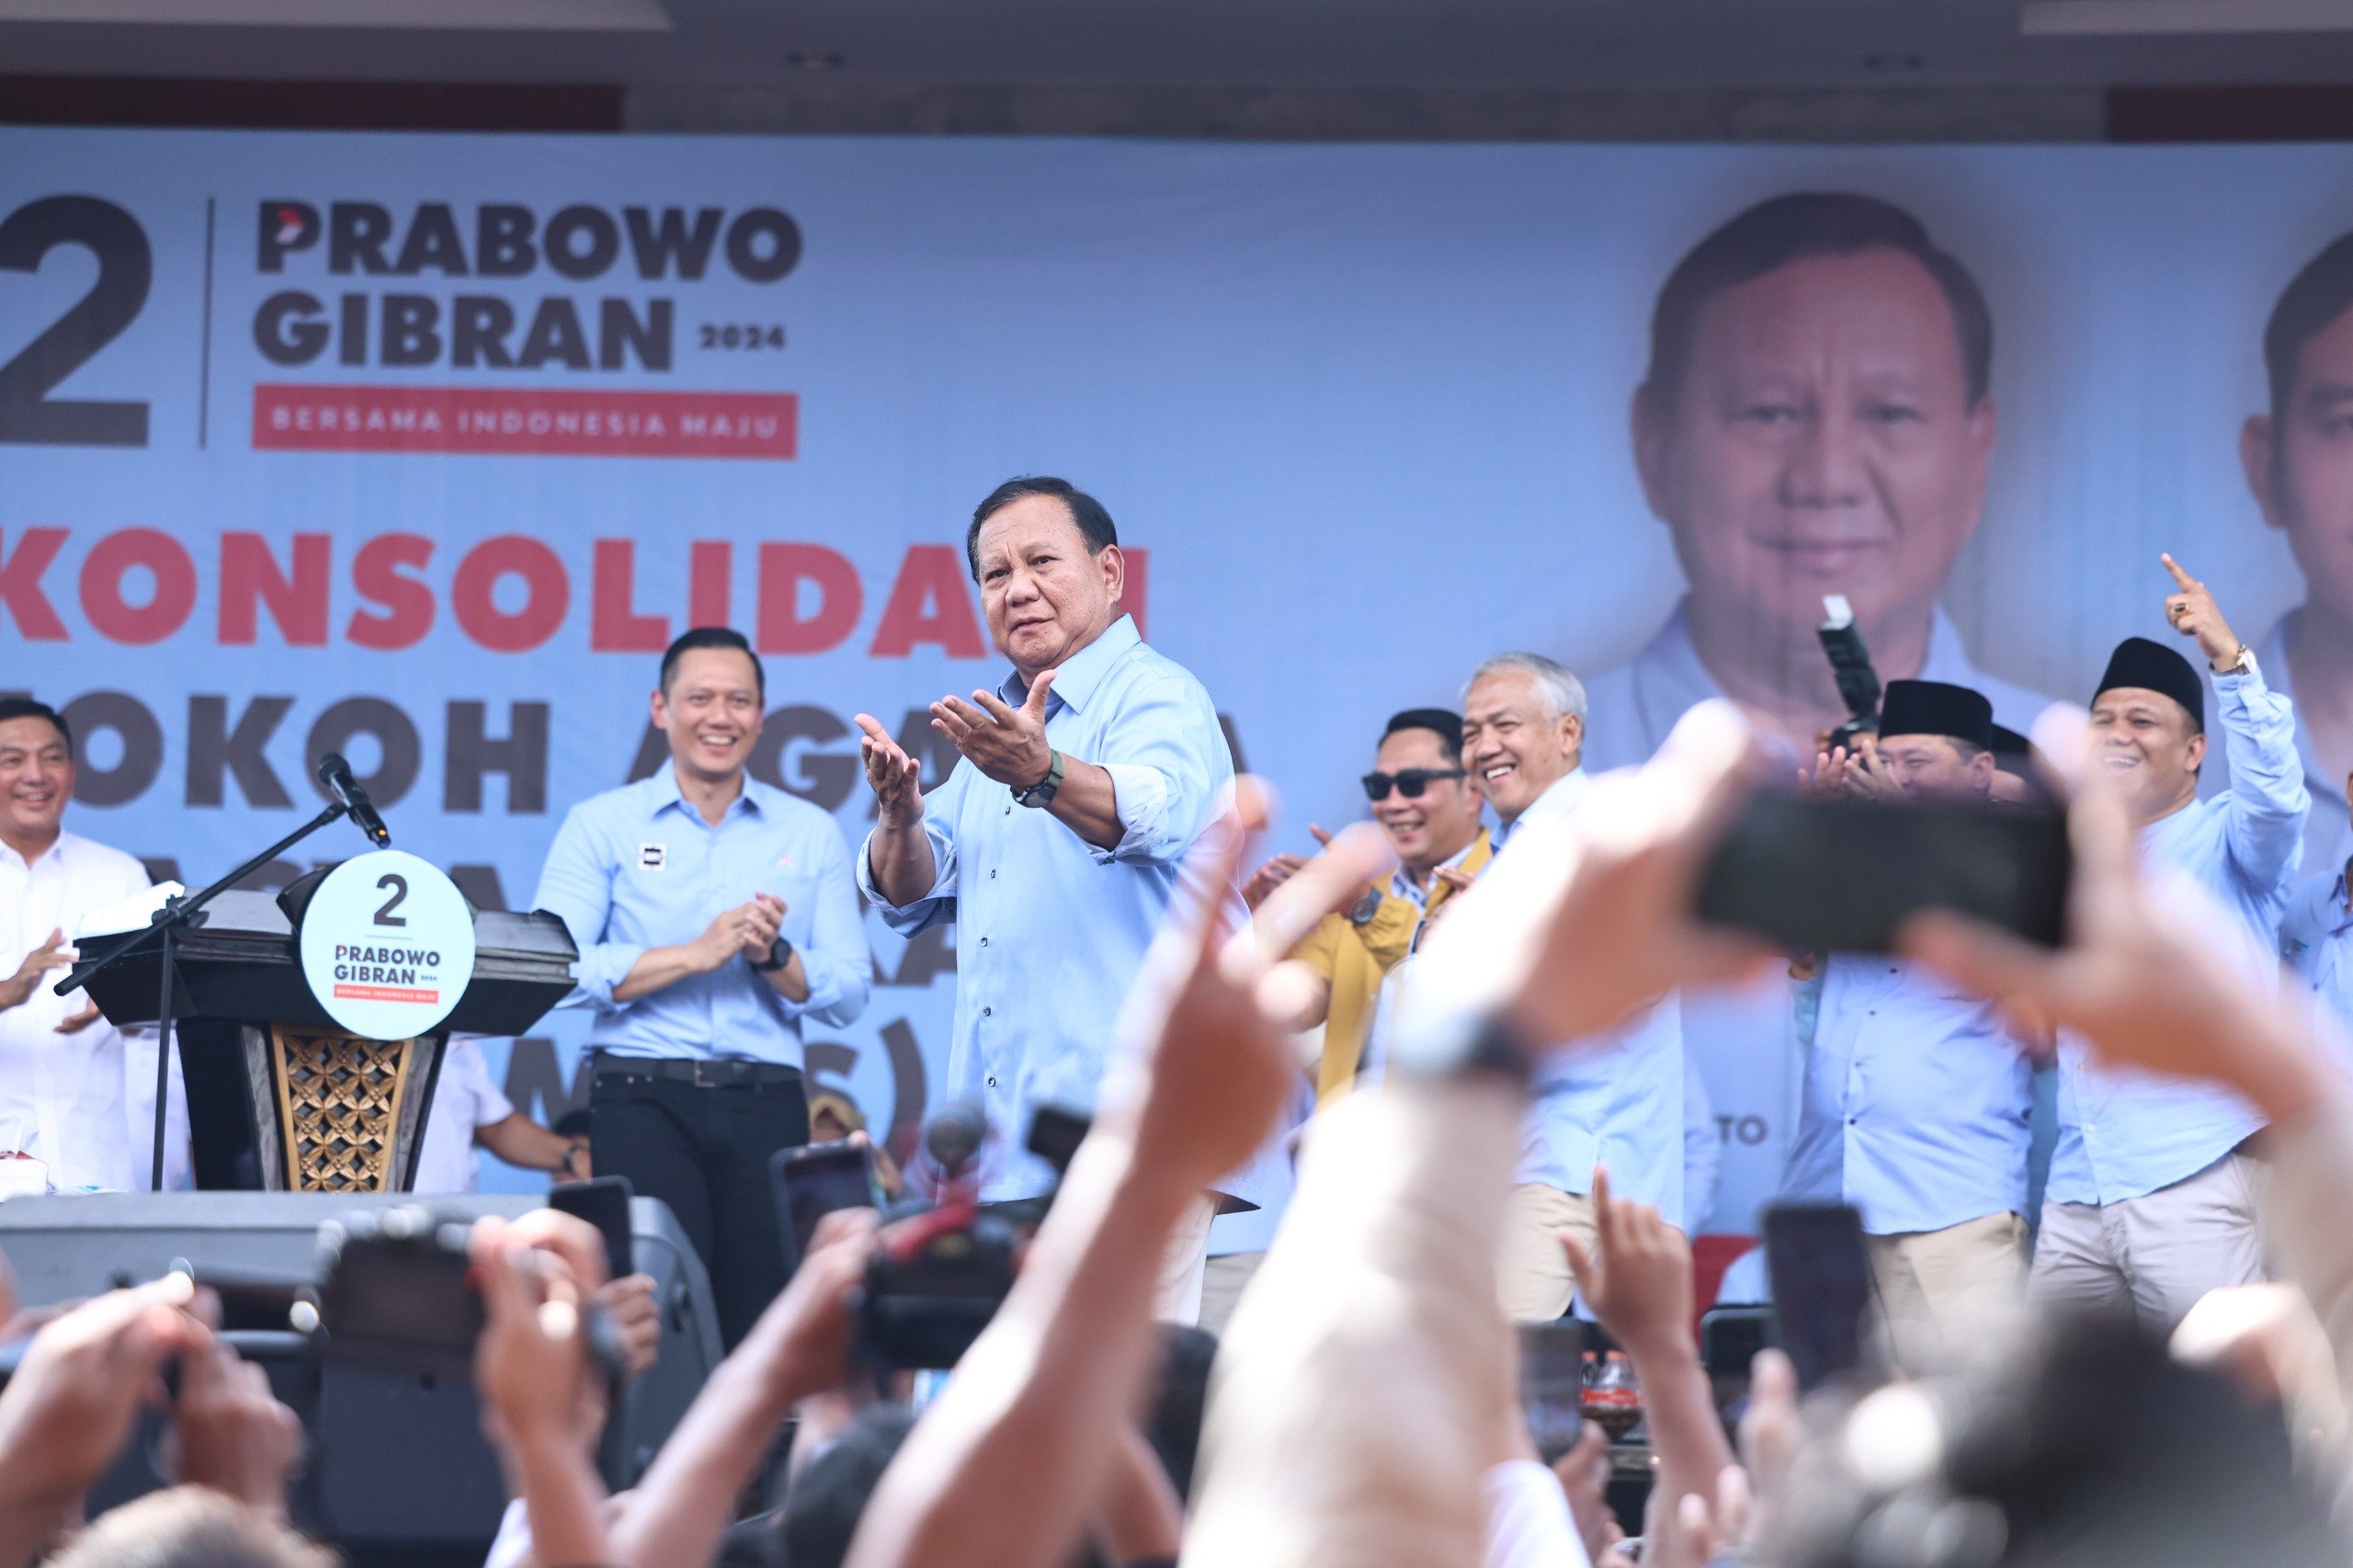 Prabowo berjoget di atas panggung (Sinpo.id/Tim Media)